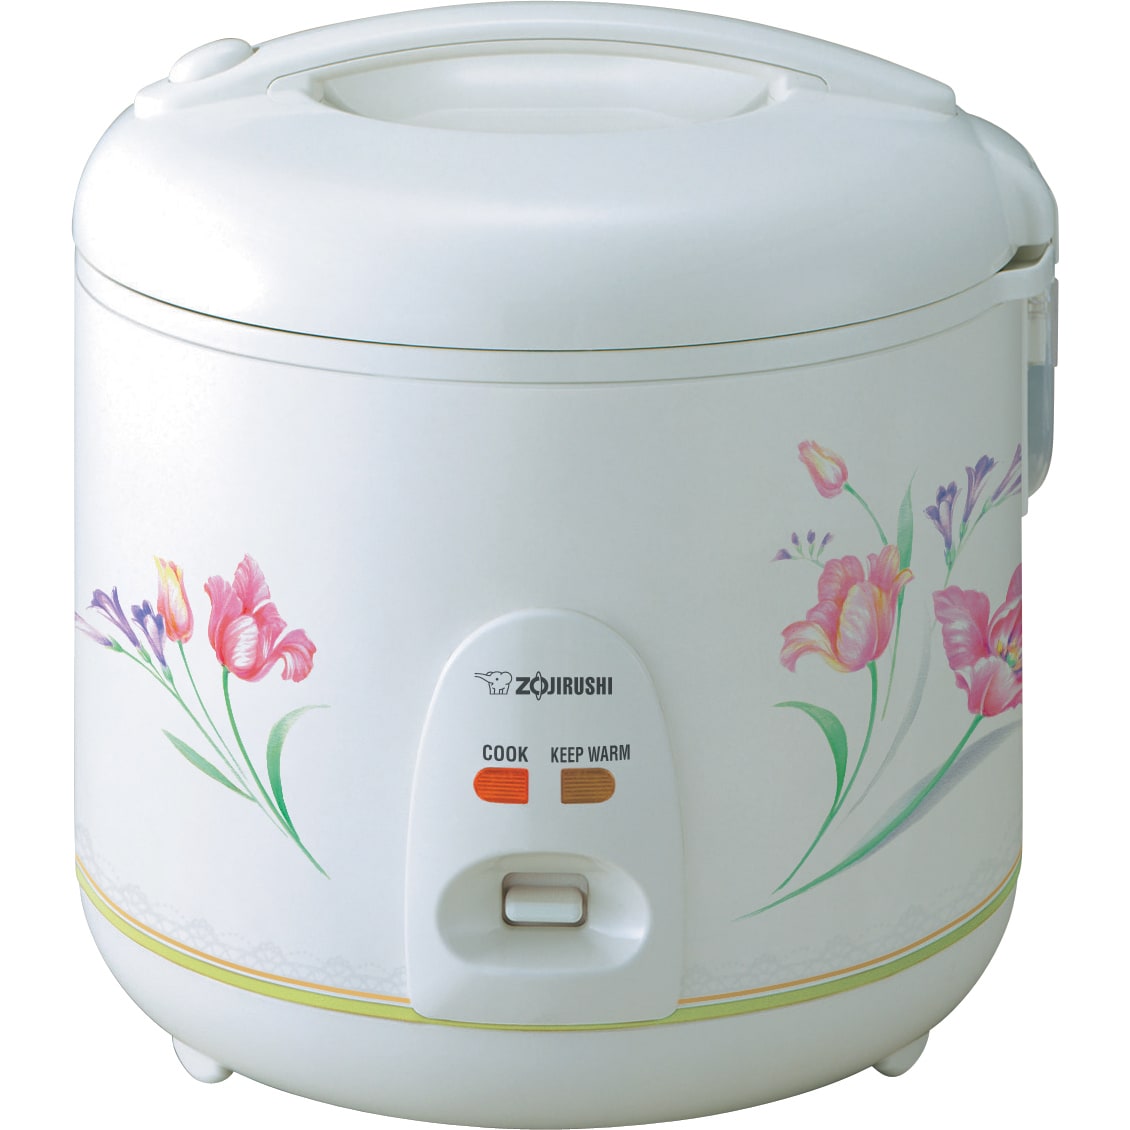 Zojirushi Micom Water Boiler & Warmer - Bed Bath & Beyond - 14086366